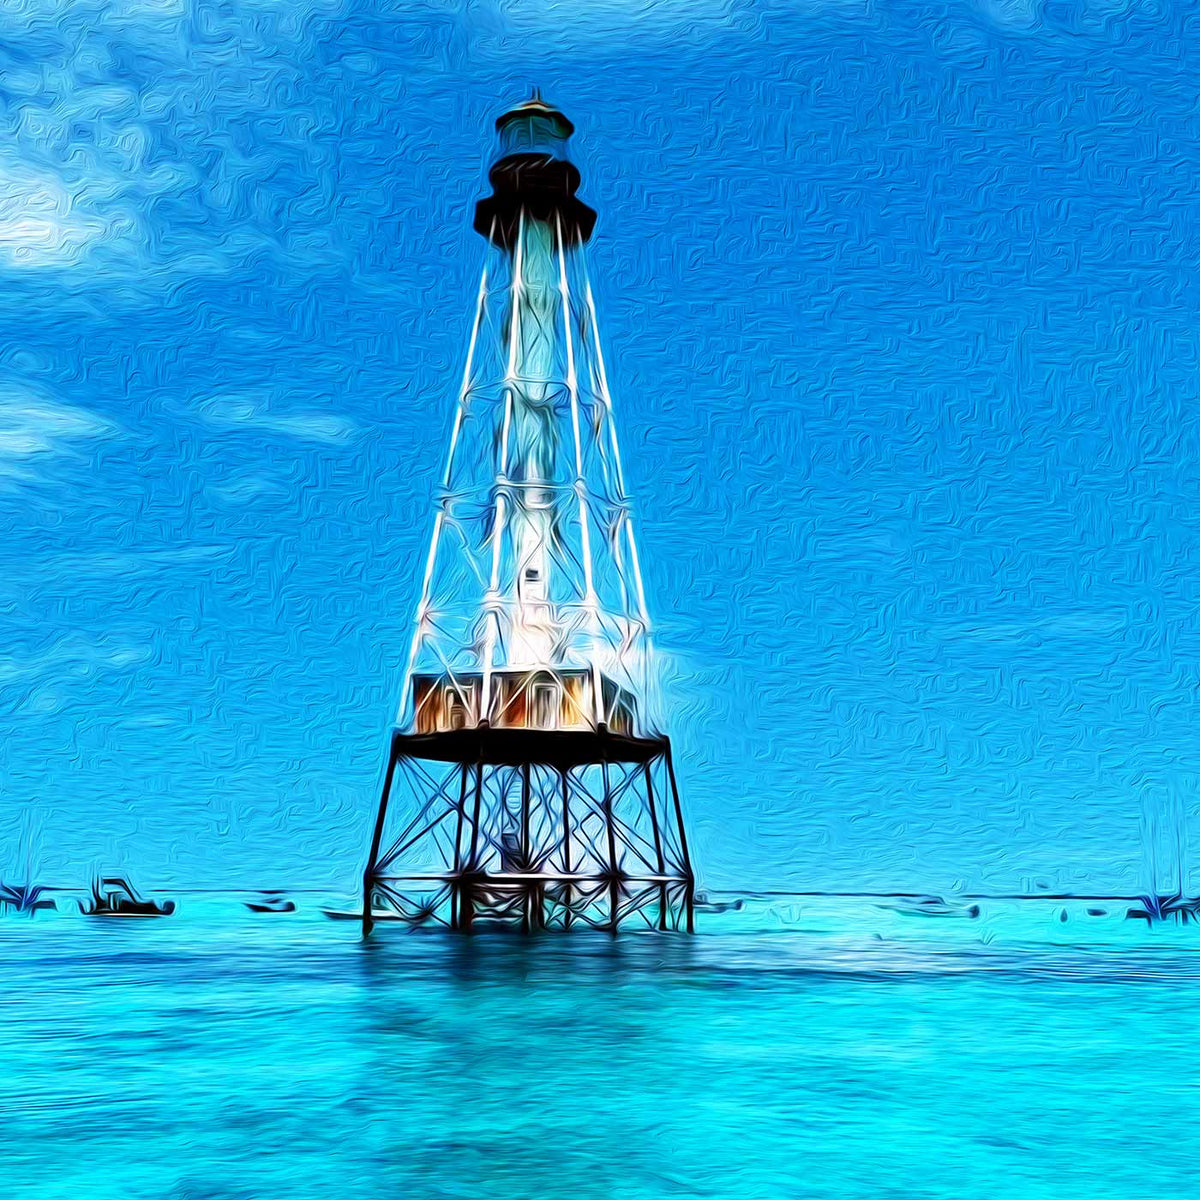 Alligator Reef Lighthouse